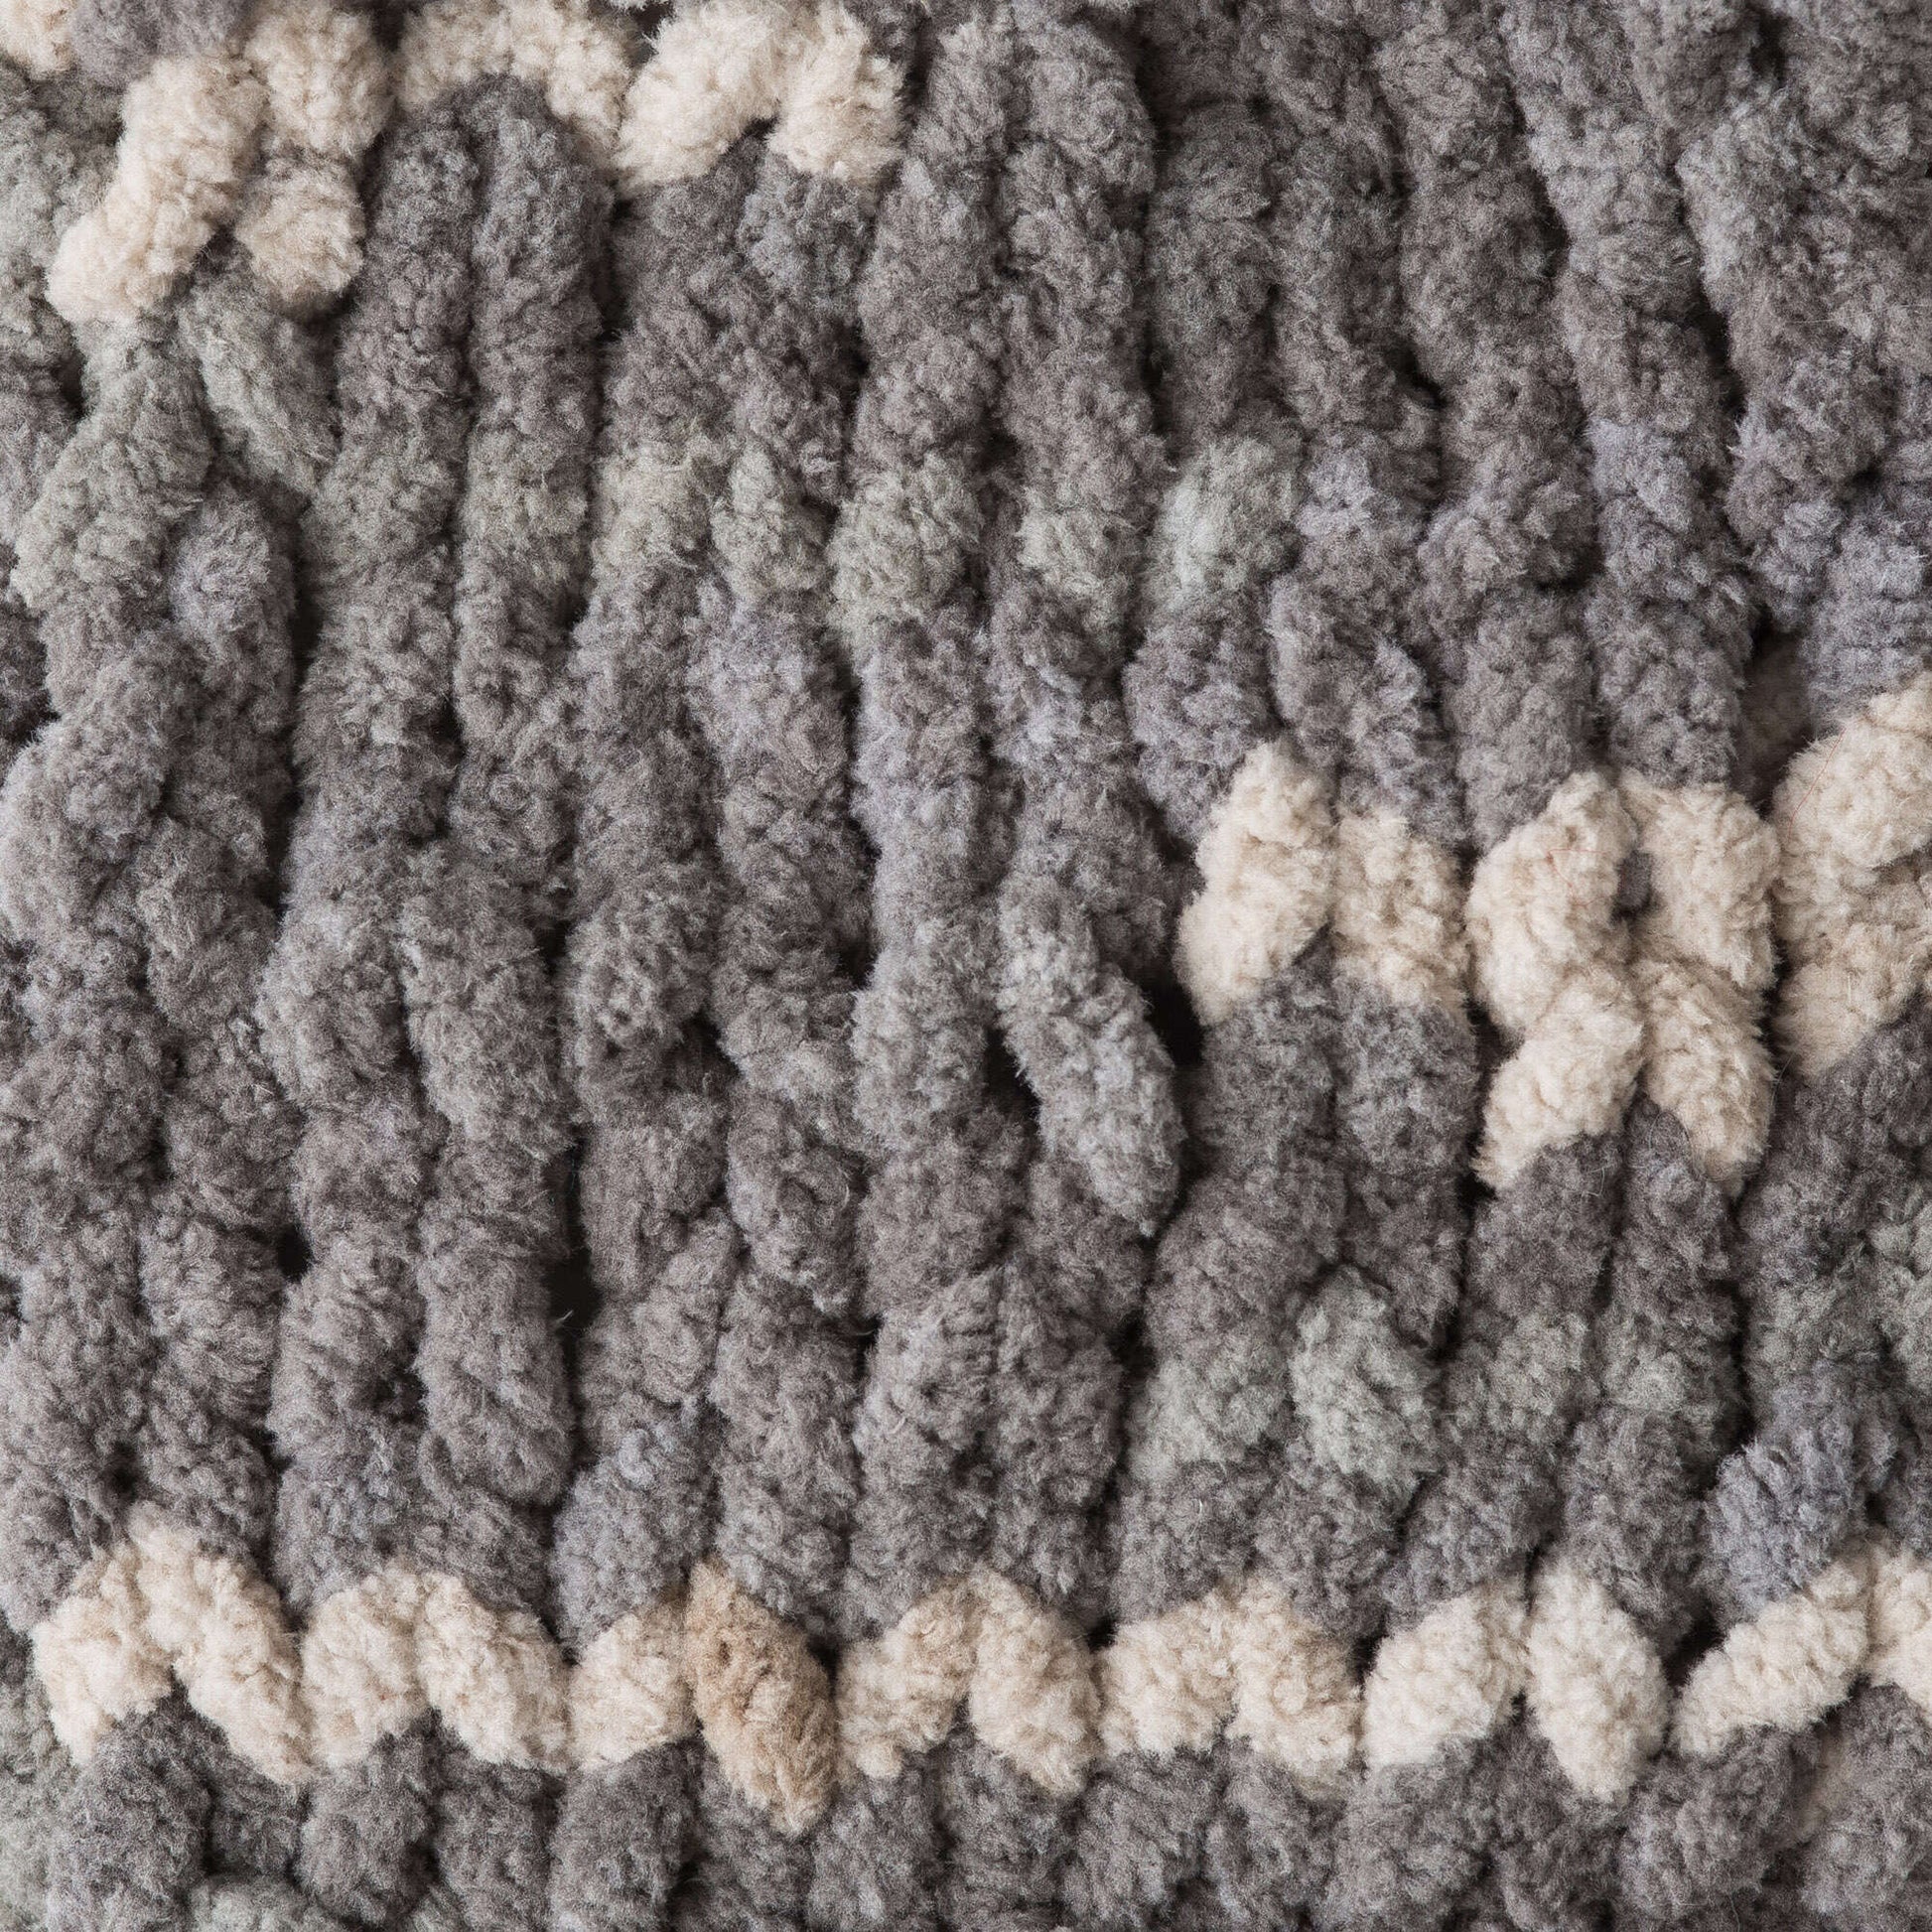 Bernat 161200-18 Blanket Yarn - Sonoma